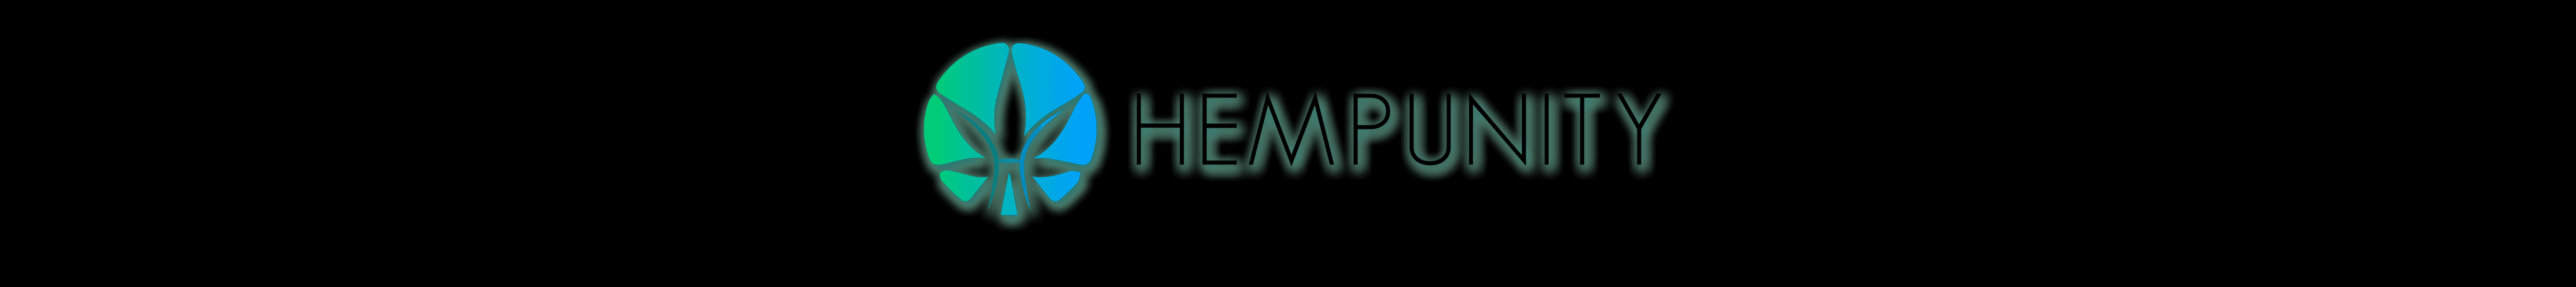 Hempunity banner